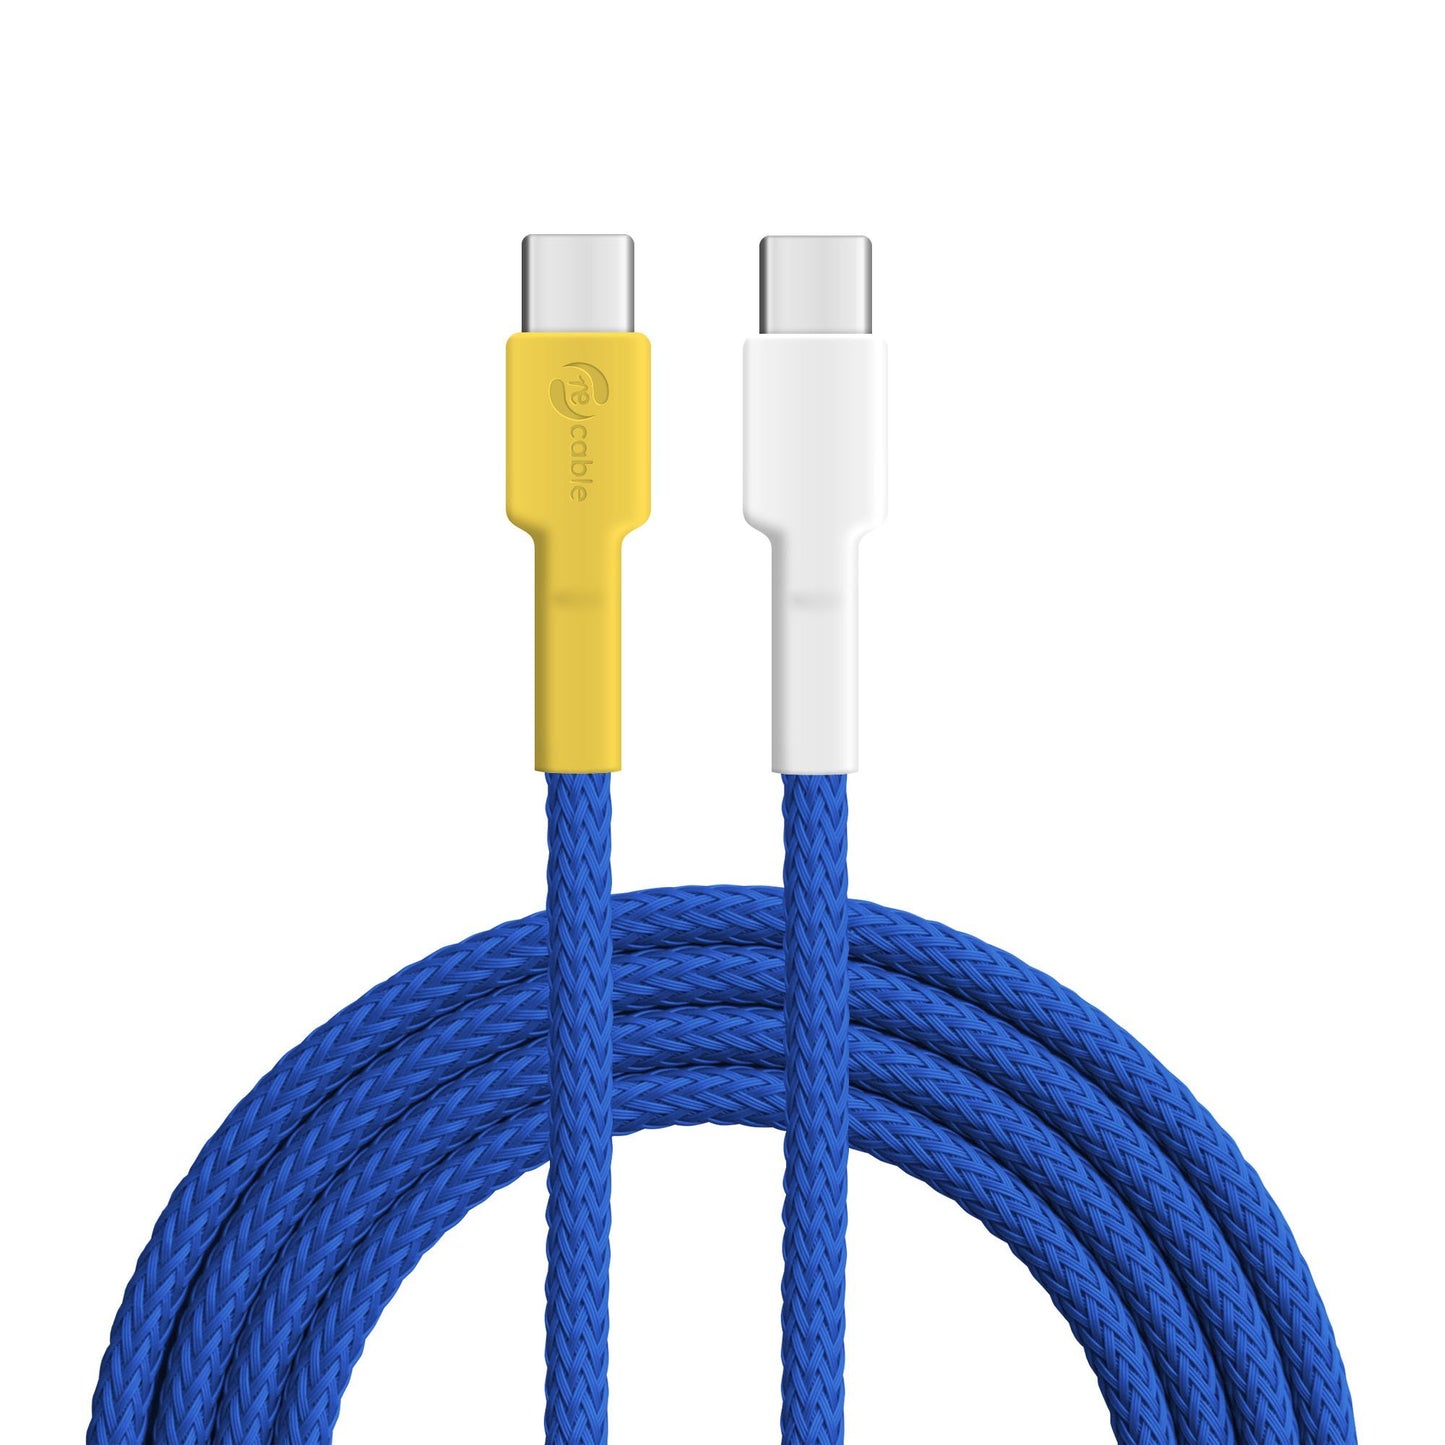 USB cable, Design: Blue tit, Connections: USB C on USB C